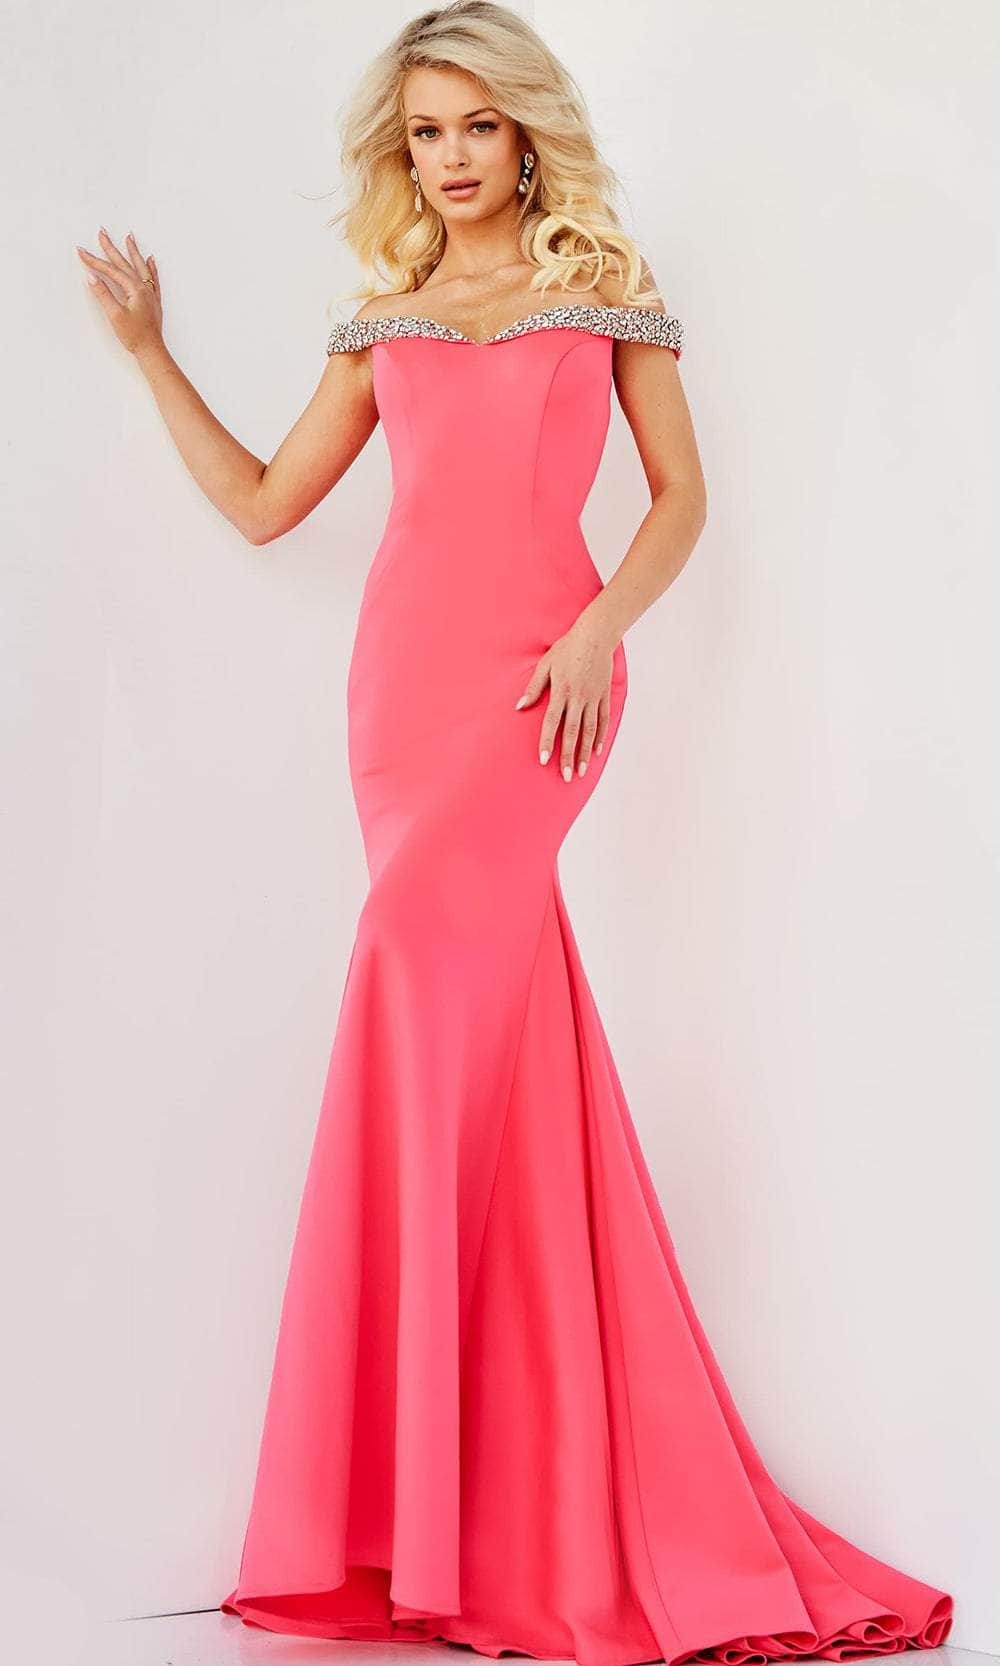 Jovani 08436 - Jewel Off Shoulder Prom Dress Special Occasion Dress